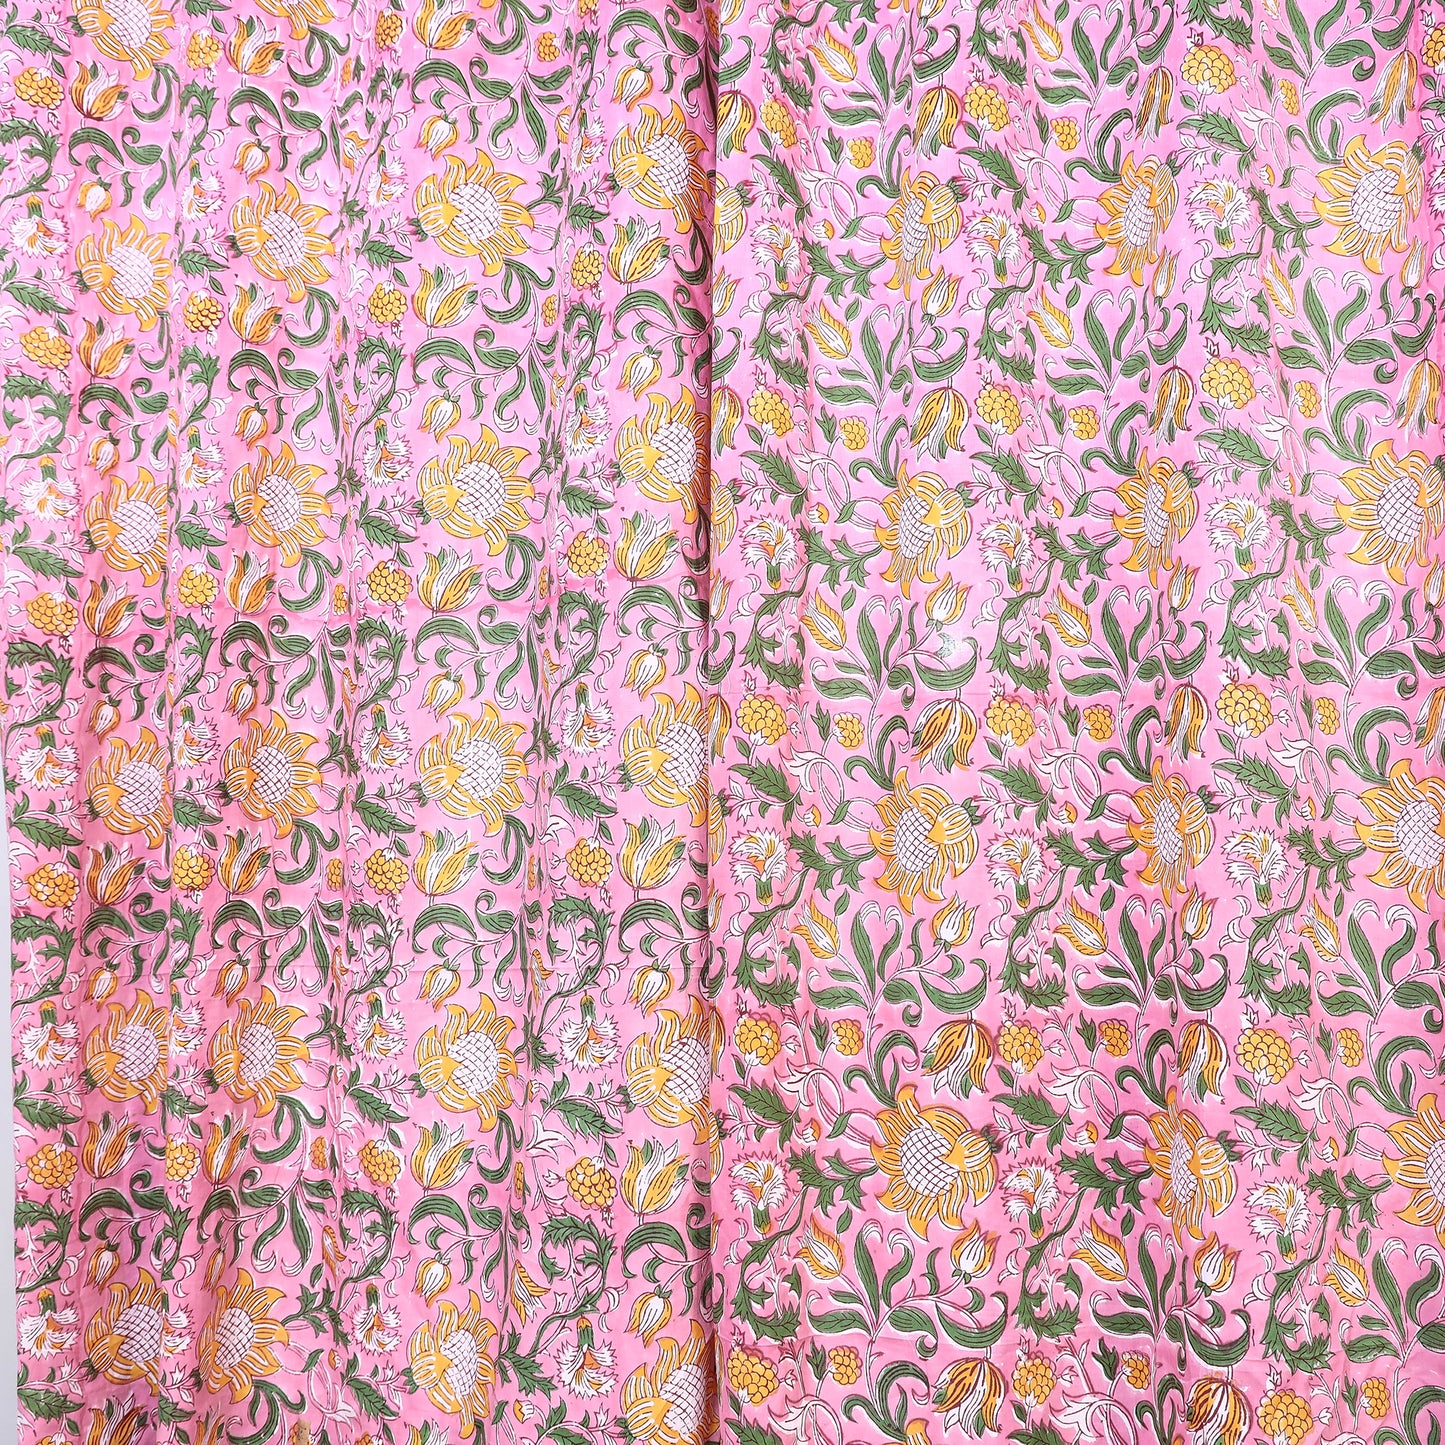 Pink - Sanganeri Block Printed Cotton Window Curtain (5 x 3 Feet) (Single Piece)